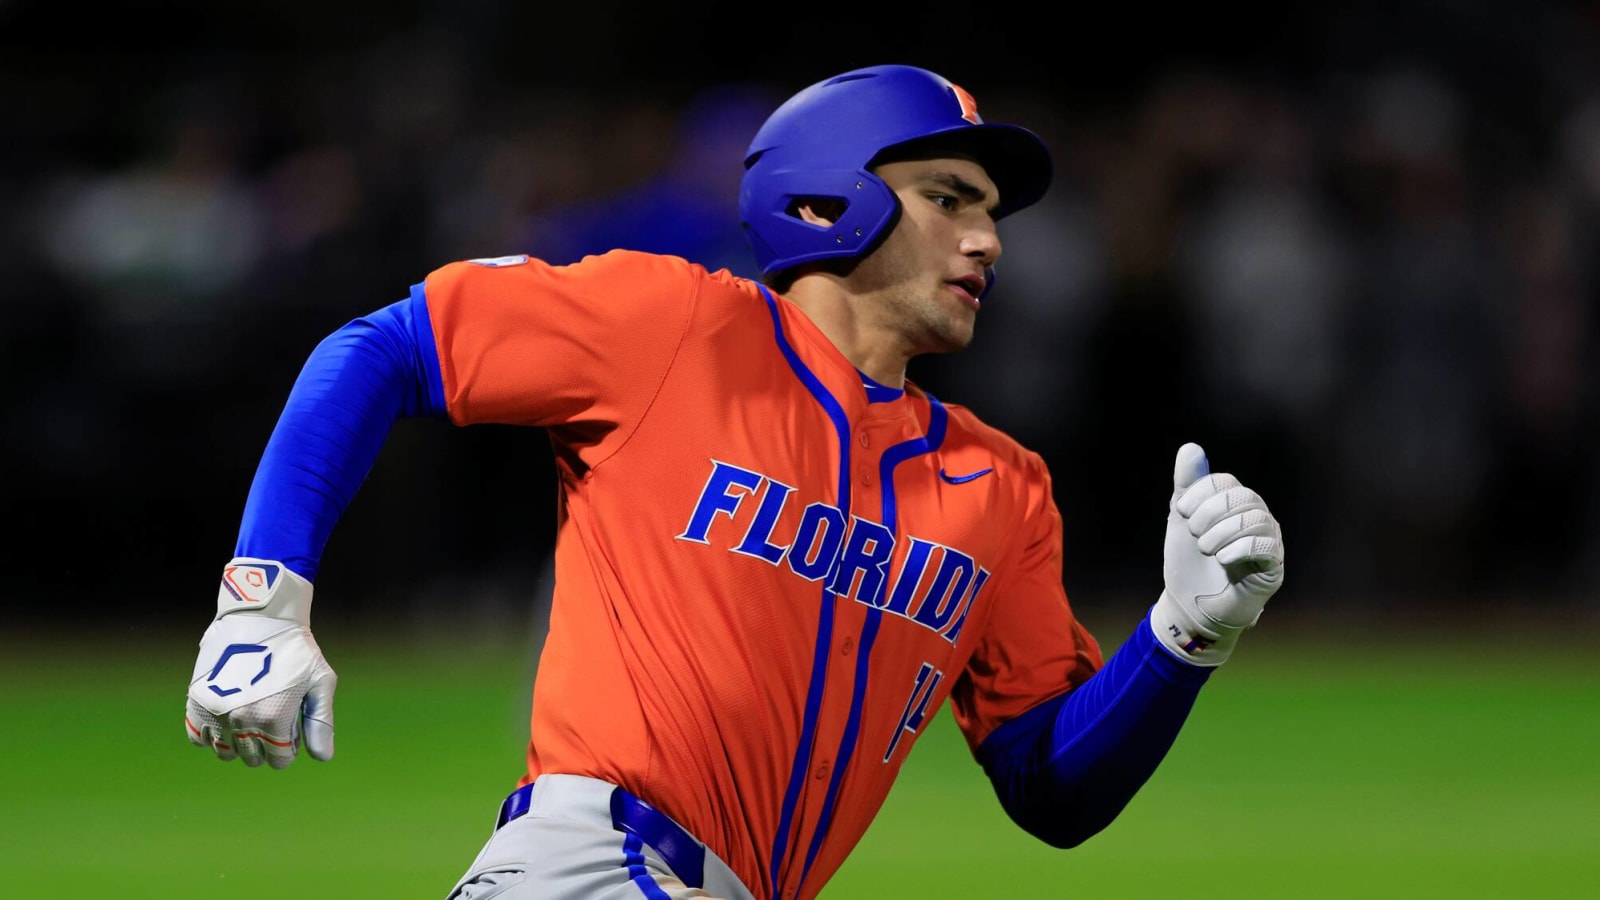 College baseball team utilizes wild shift against Florida slugger